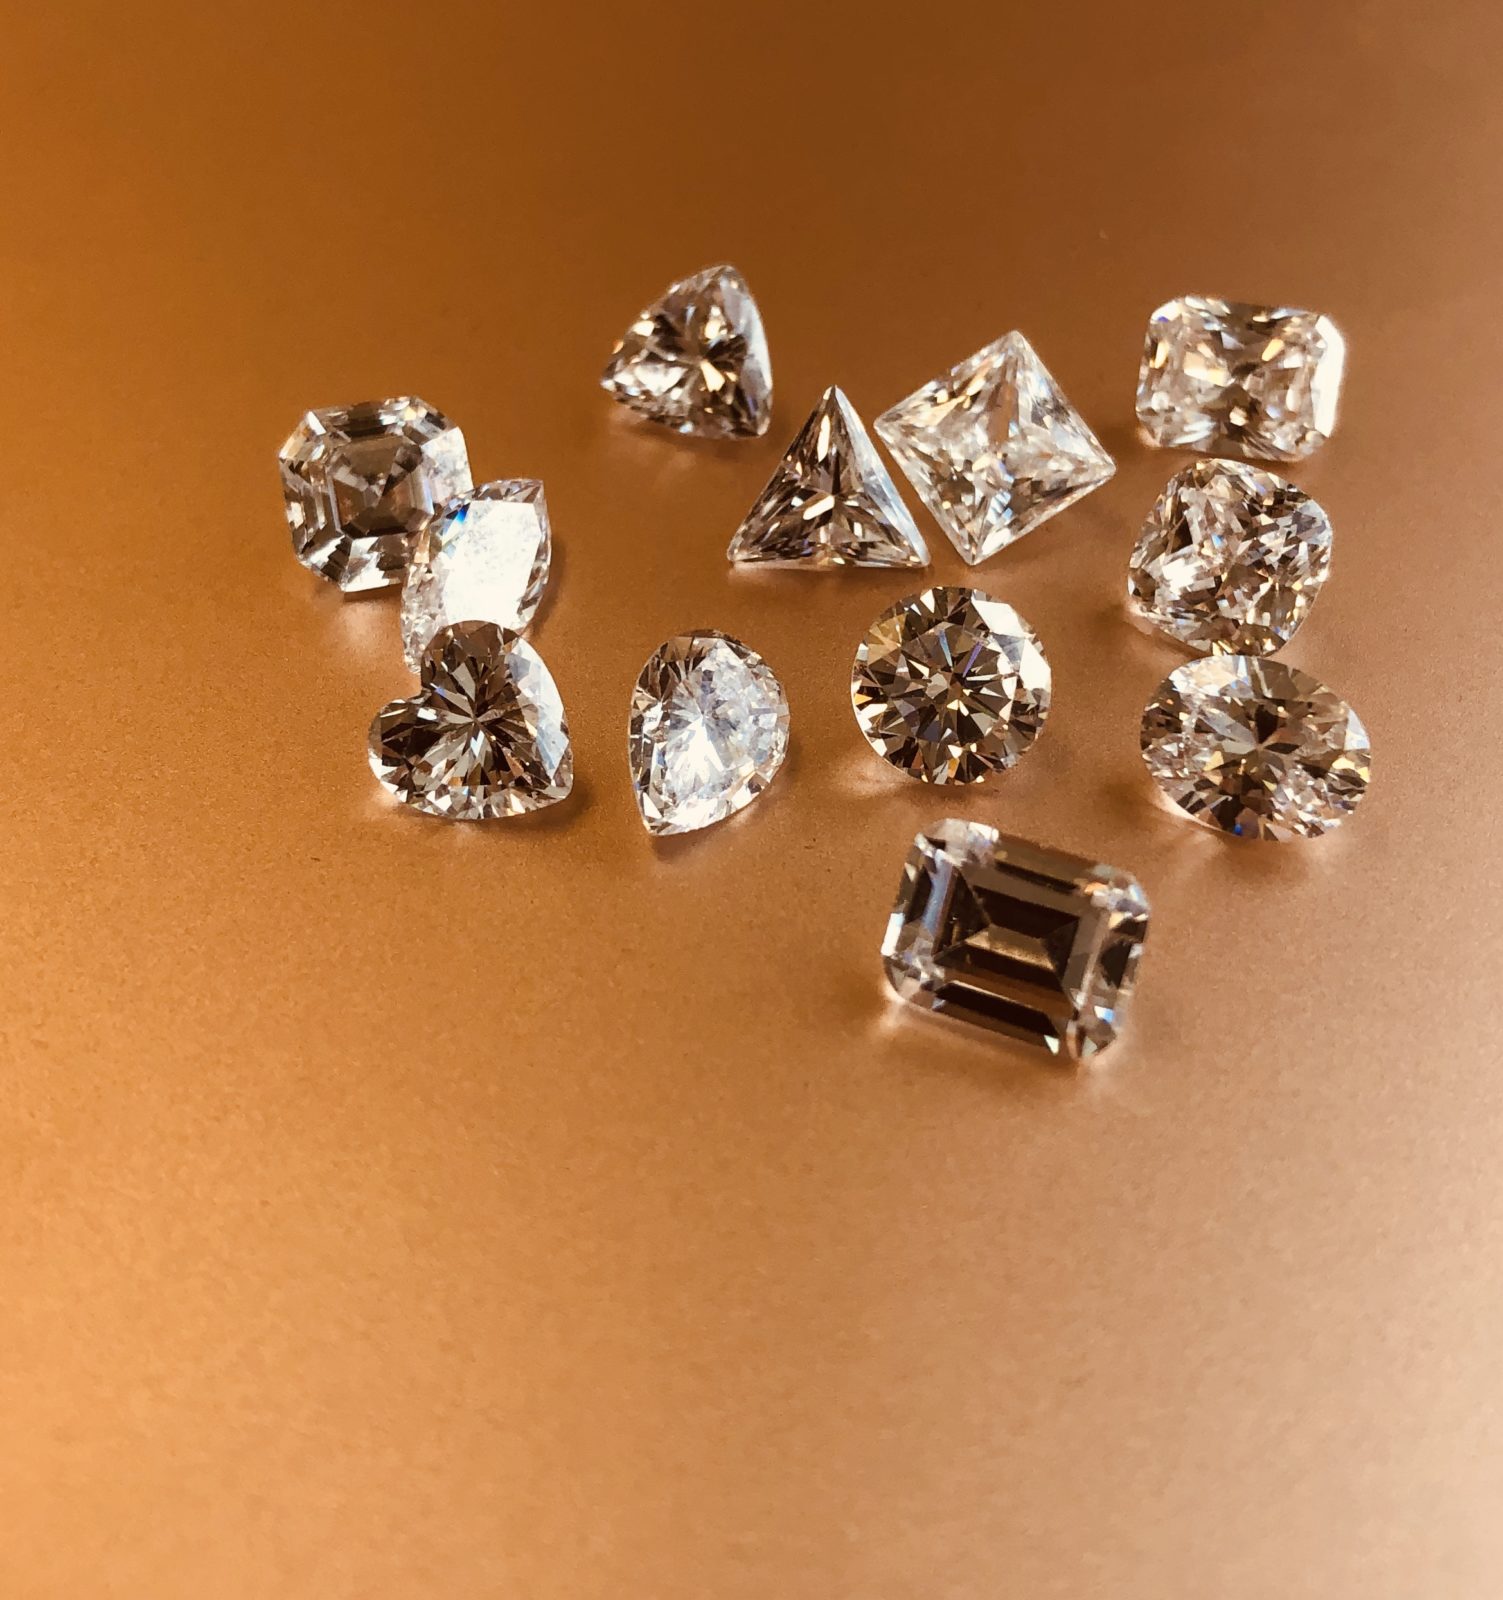 THE 10 MOST POPULAR DIAMOND SHAPES